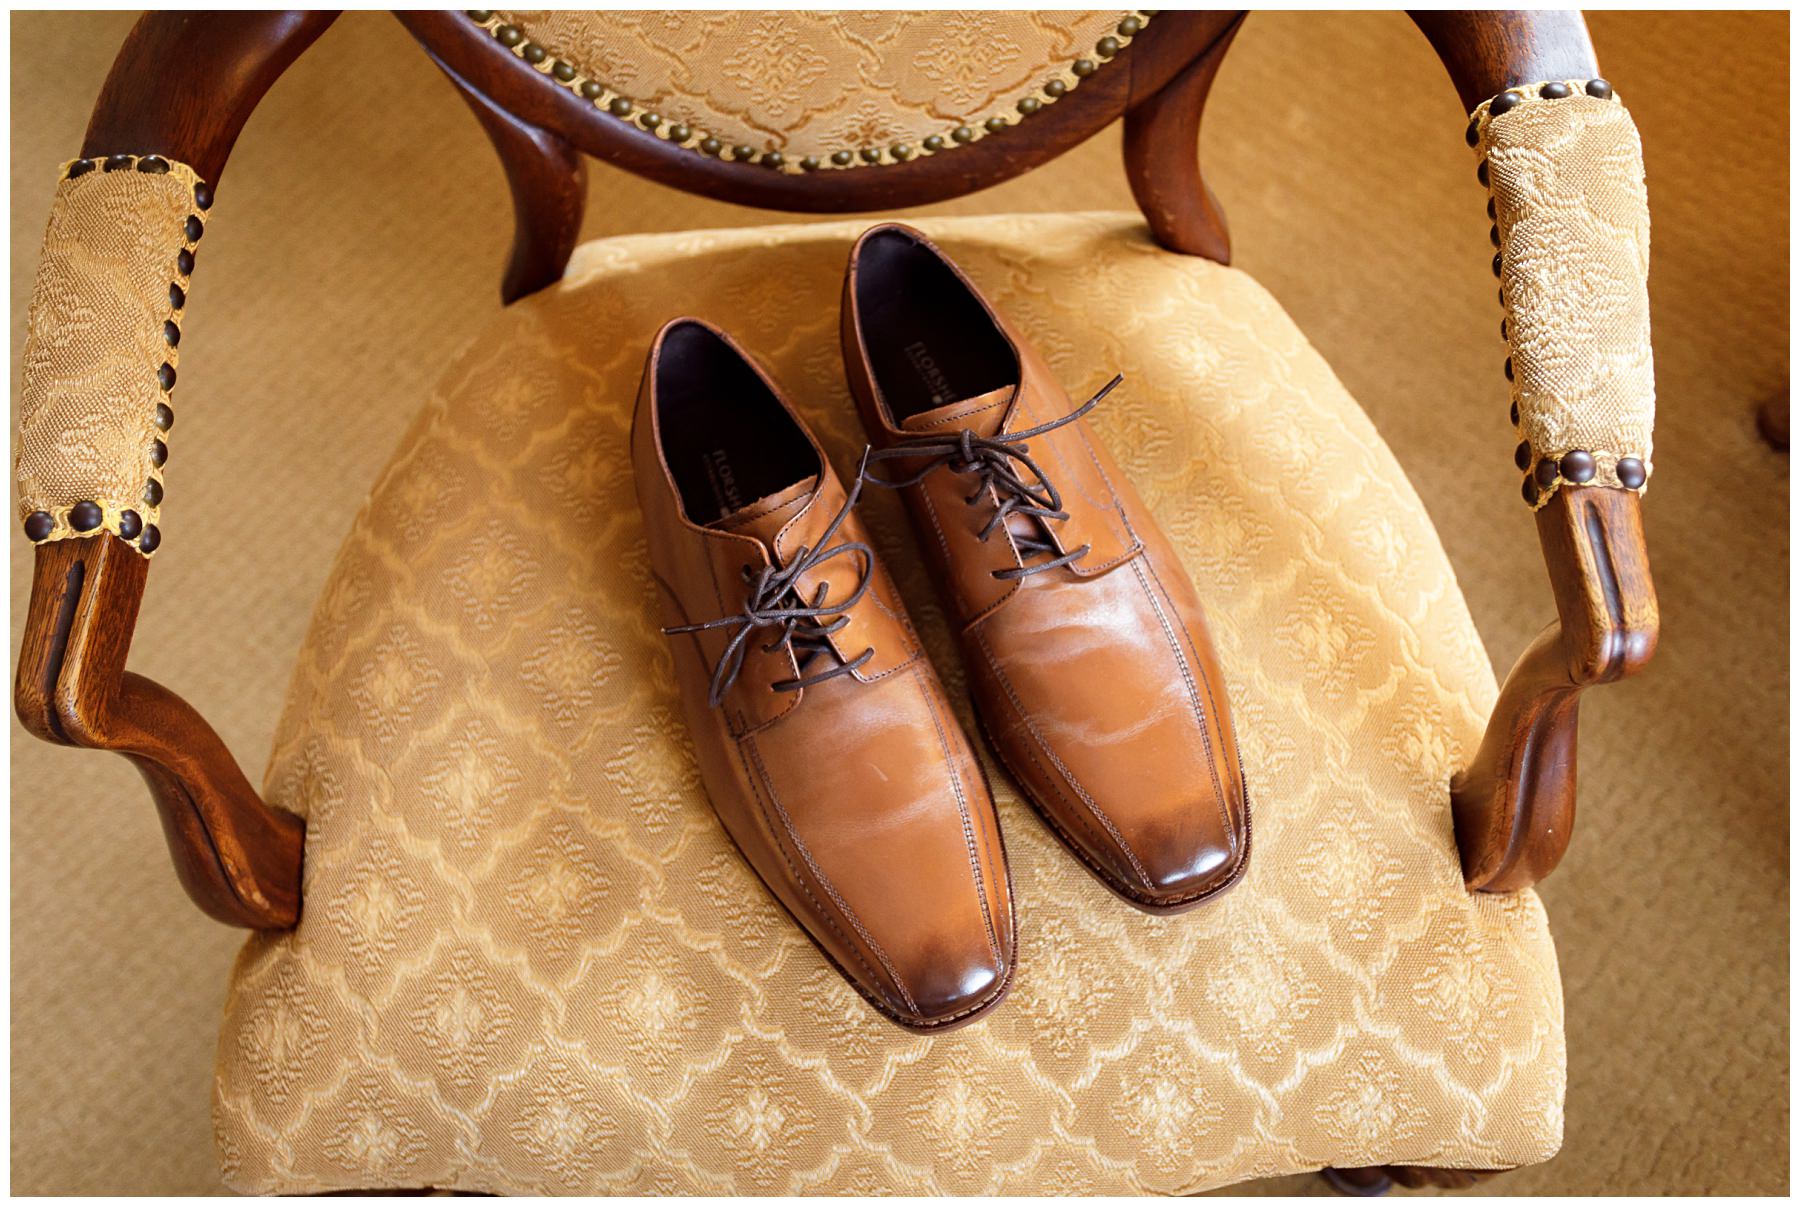 groom shoes